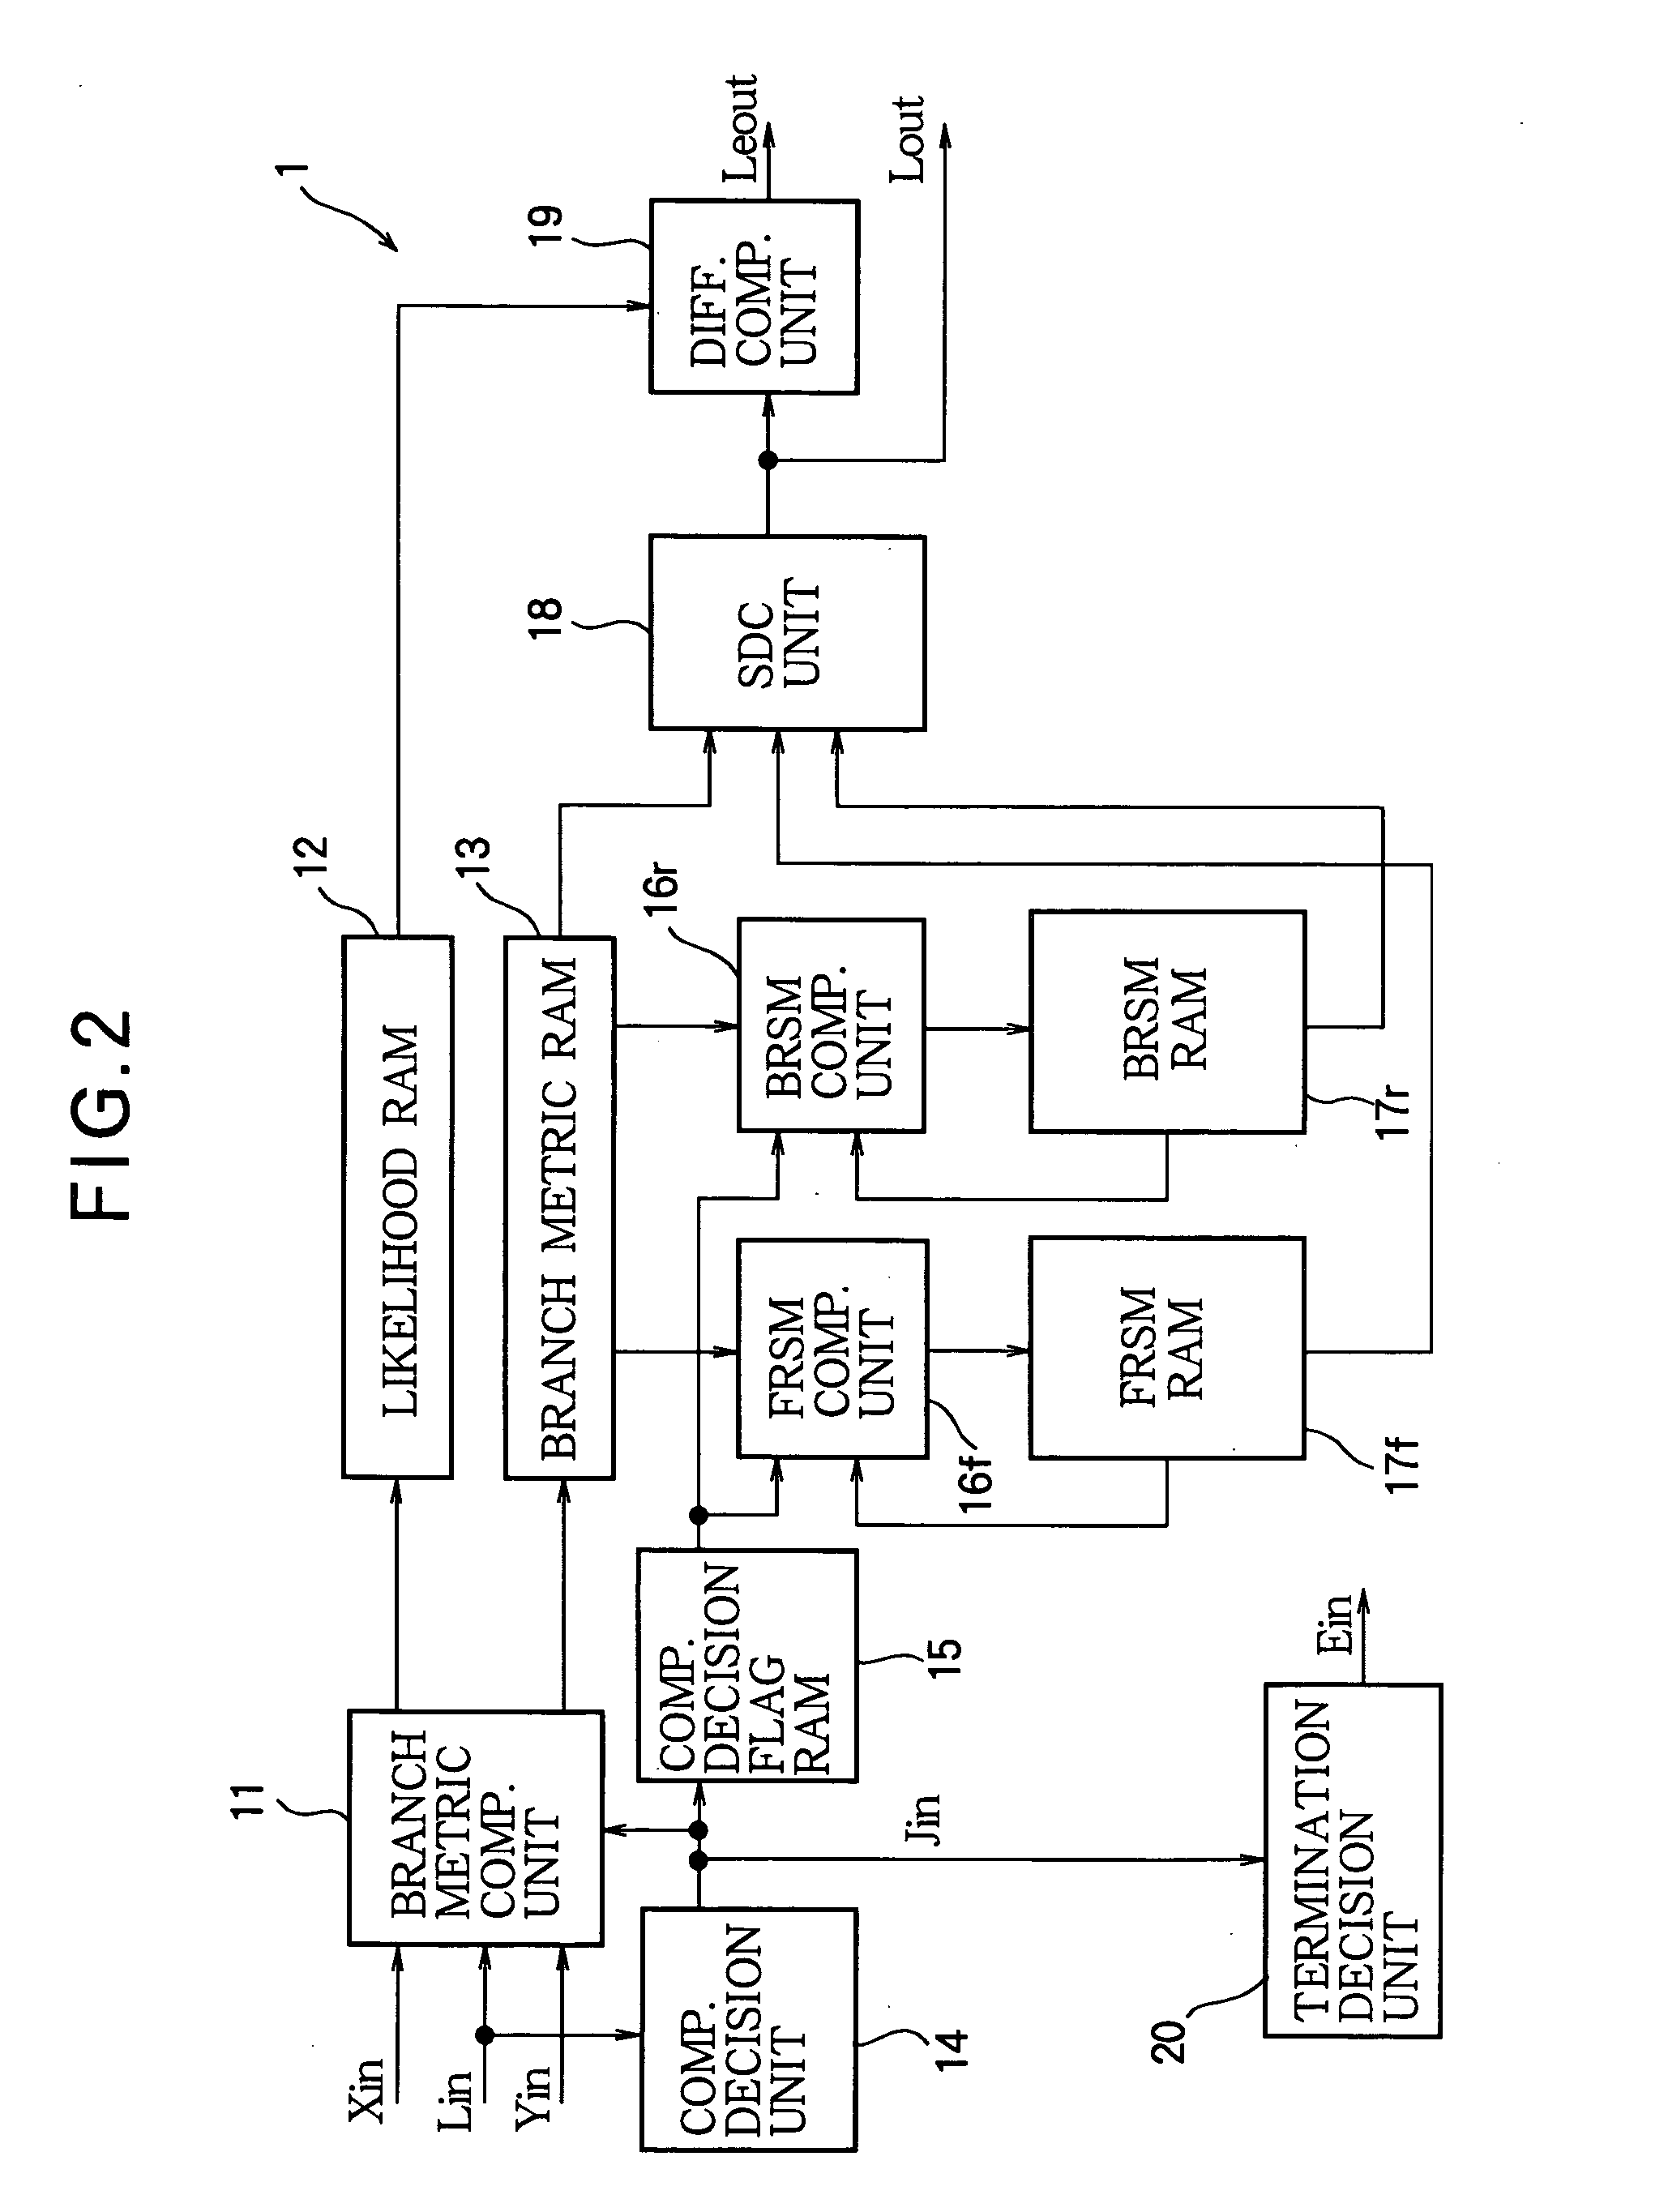 Soft-output decoder with computation decision unit